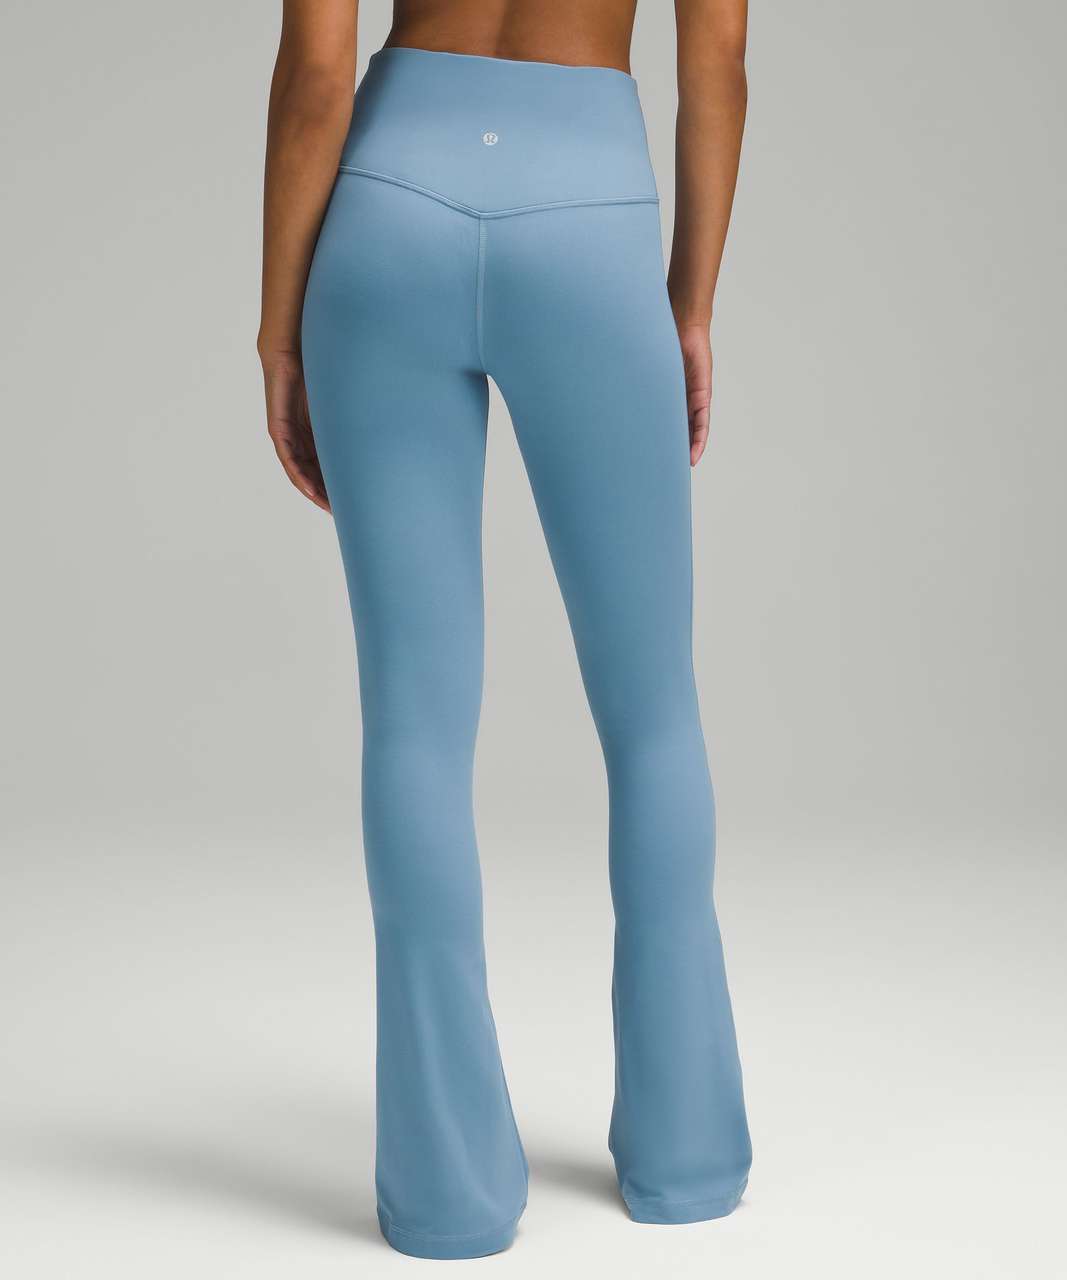 Lululemon Athletica Blue Active Pants Size 10 - 50% off